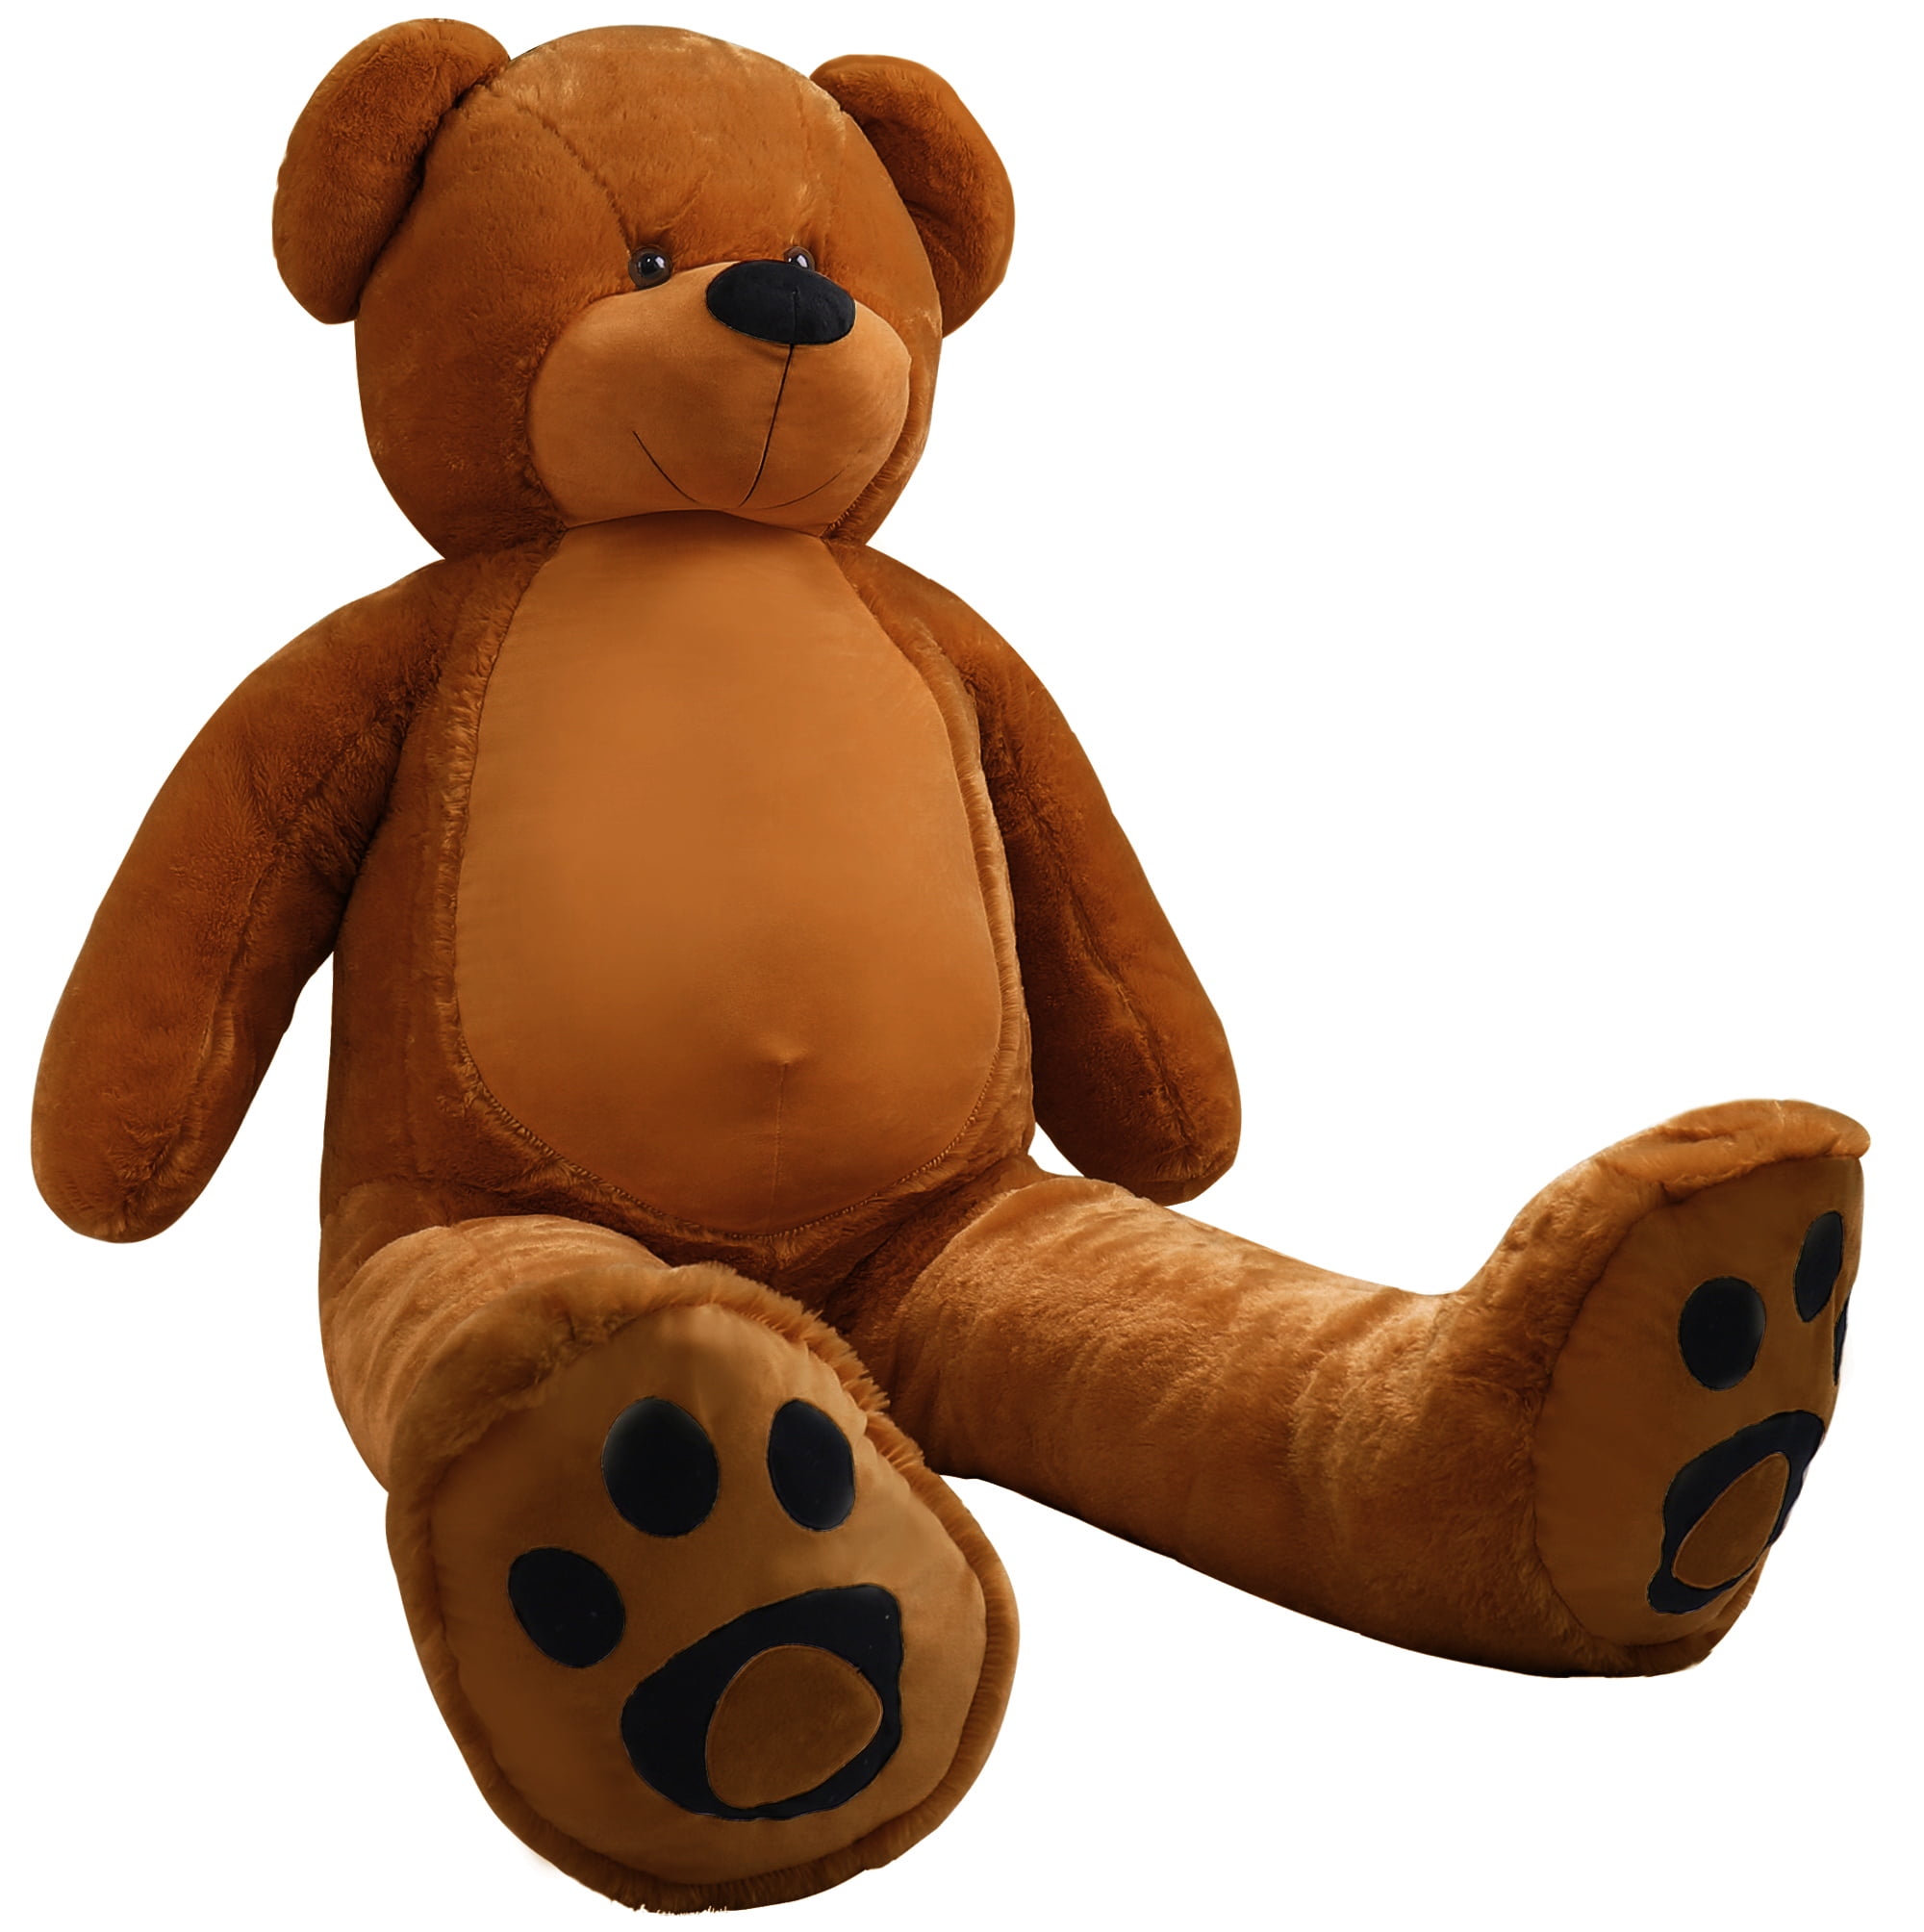 47" GIANT BIG HUGE SLEEPY "Dark brown" TEDDY BEAR PLUSH SOFT toys doll gift 